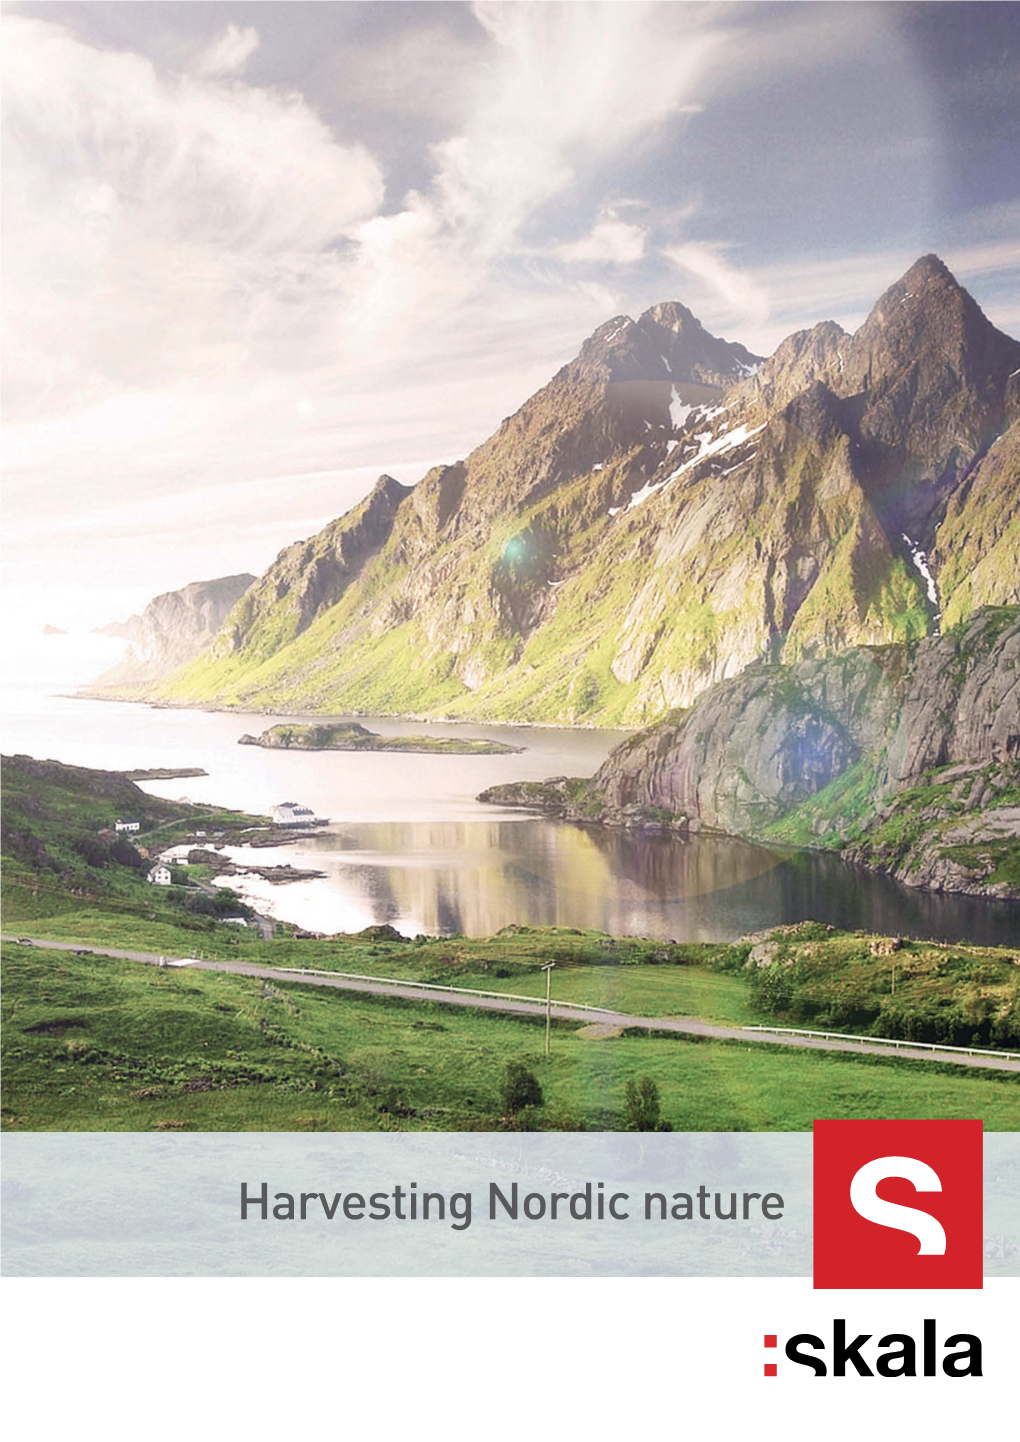 About Skala: Harvesting Nordic Nature